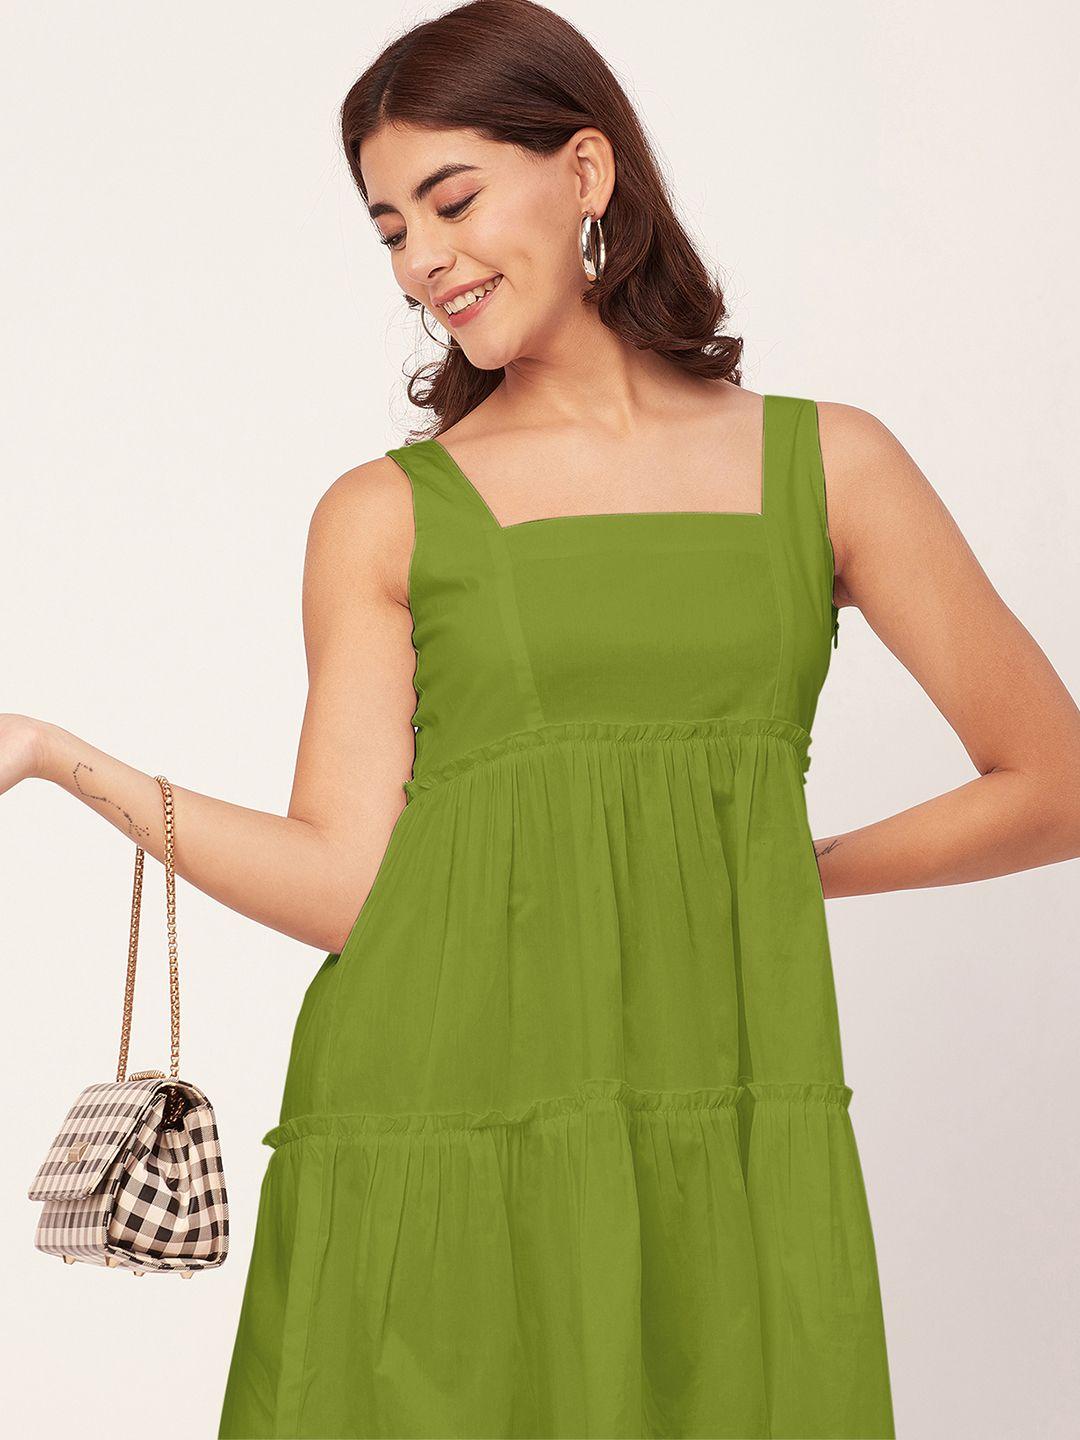 moomaya-green-fit-&-flare-dress